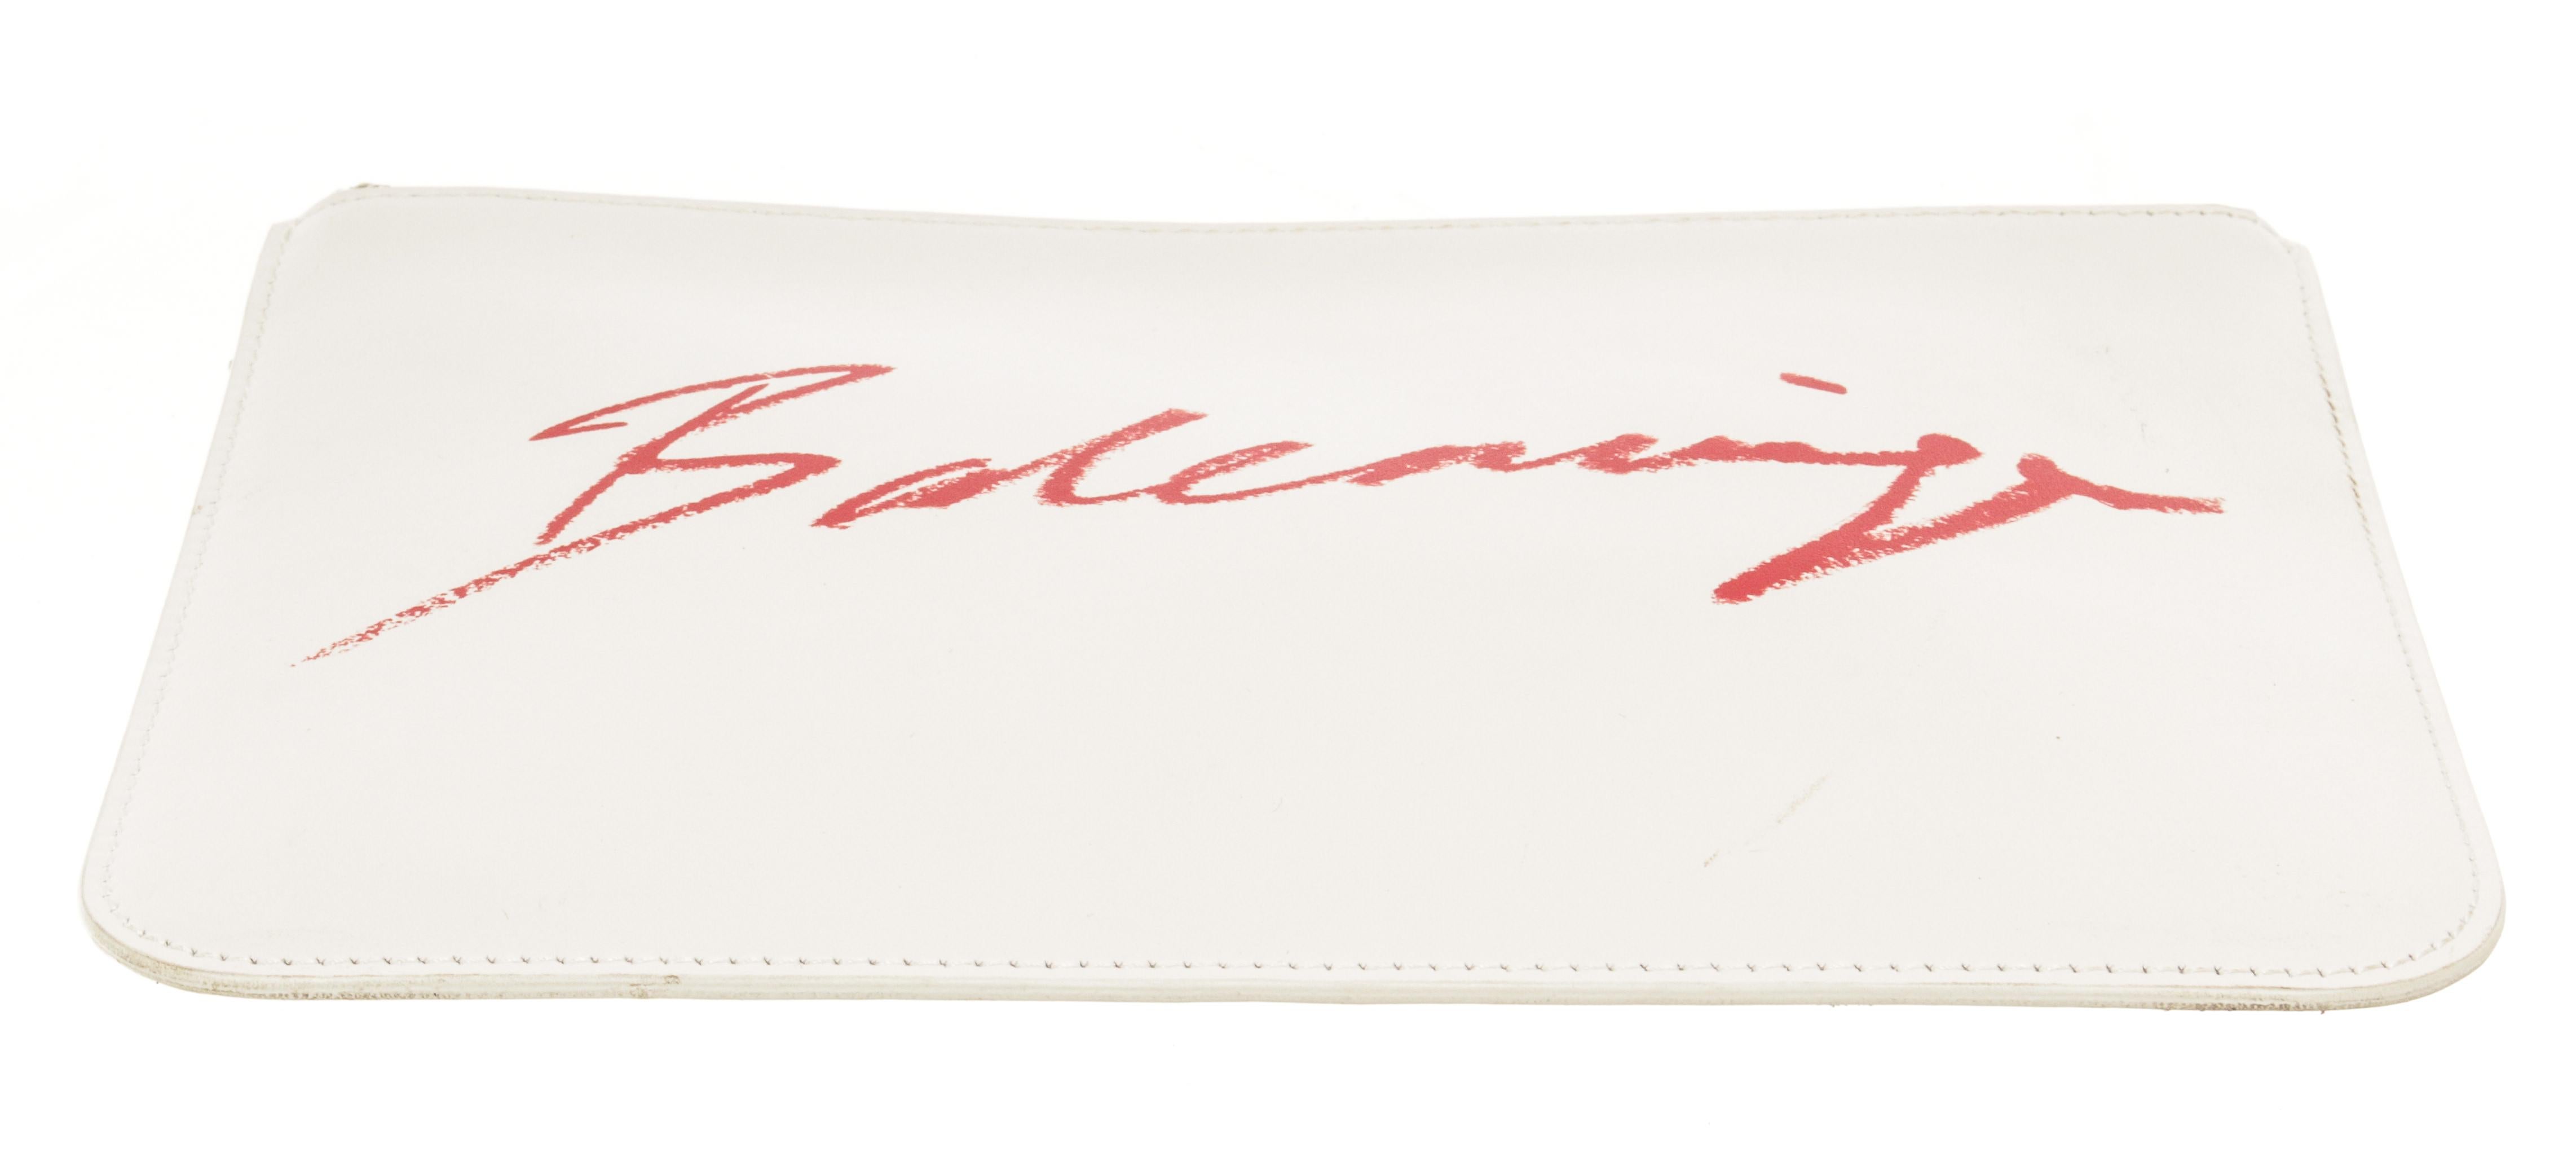 Balenciaga White Leather Logo Clutch with zipper closure and one slip pocket

880042MSC